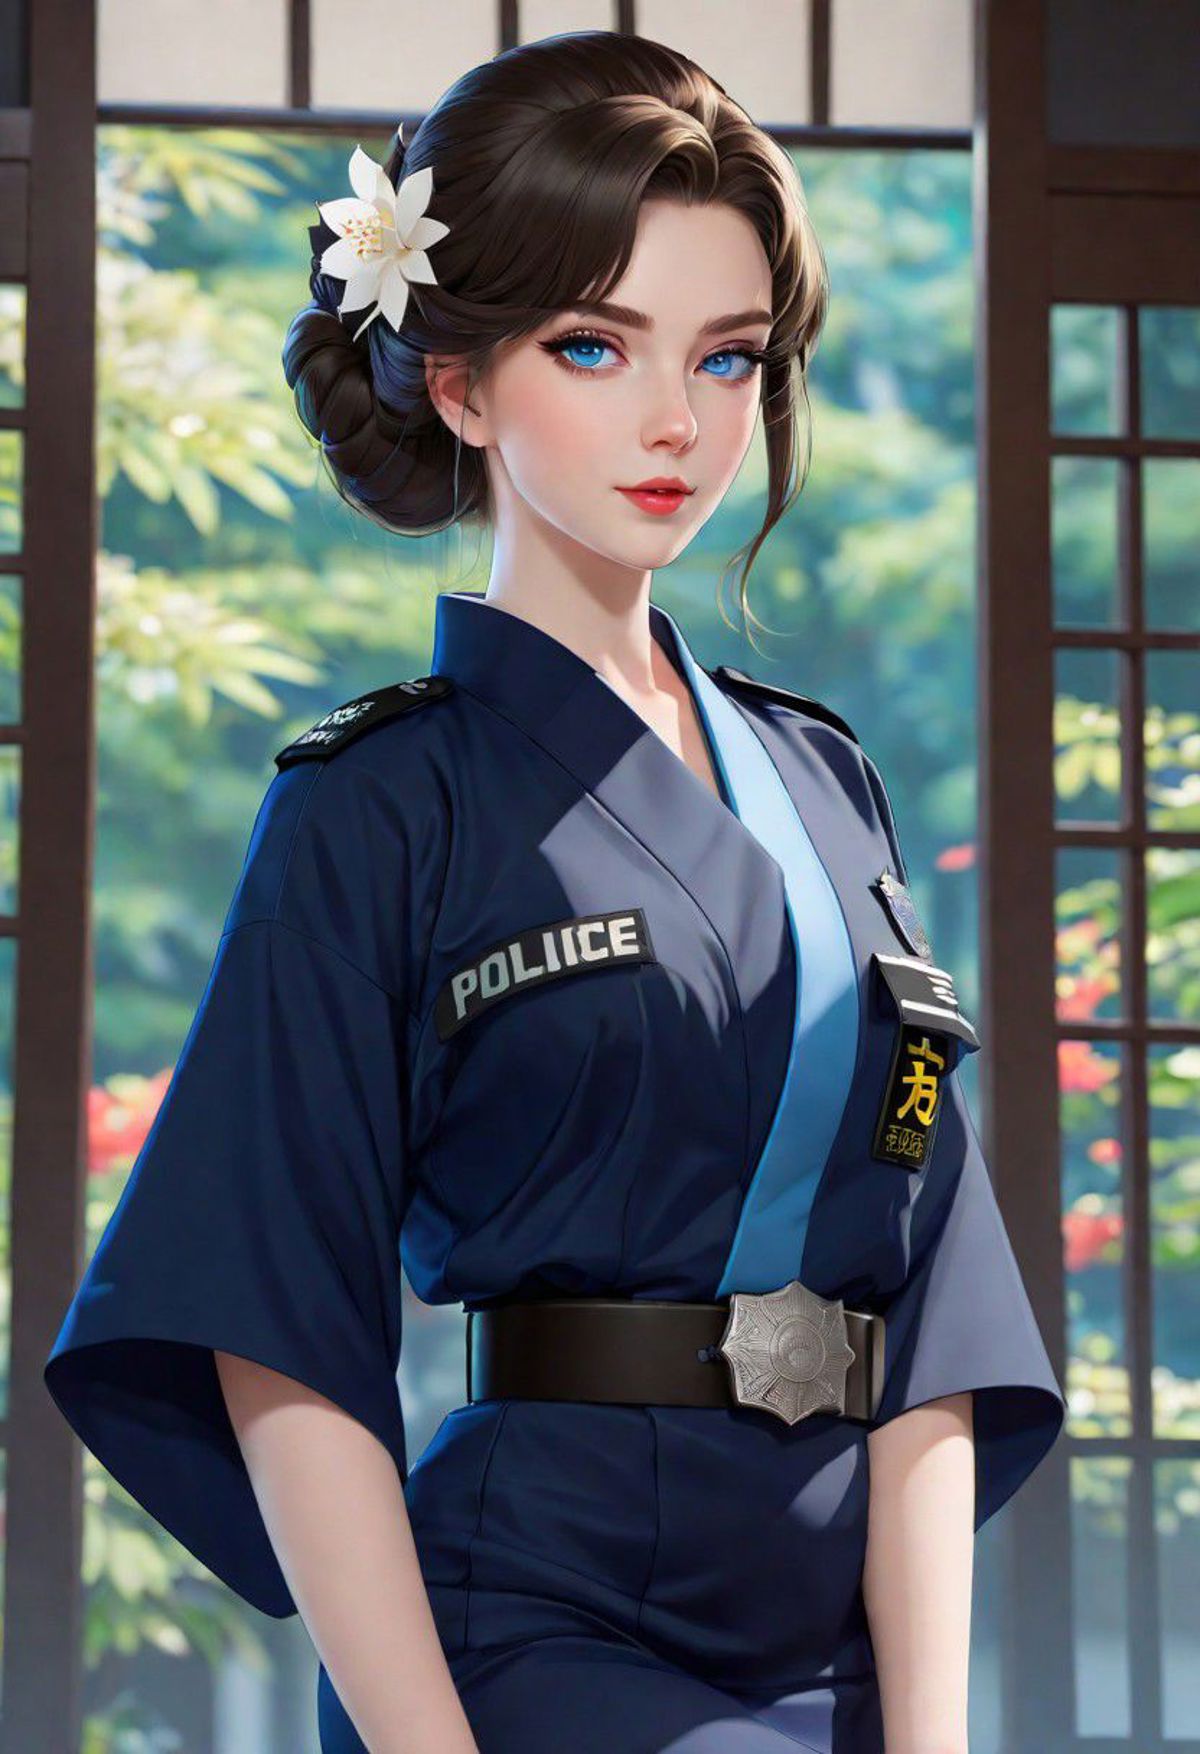 Blue Eye Samurai (Art Style) image by cristianchirita749